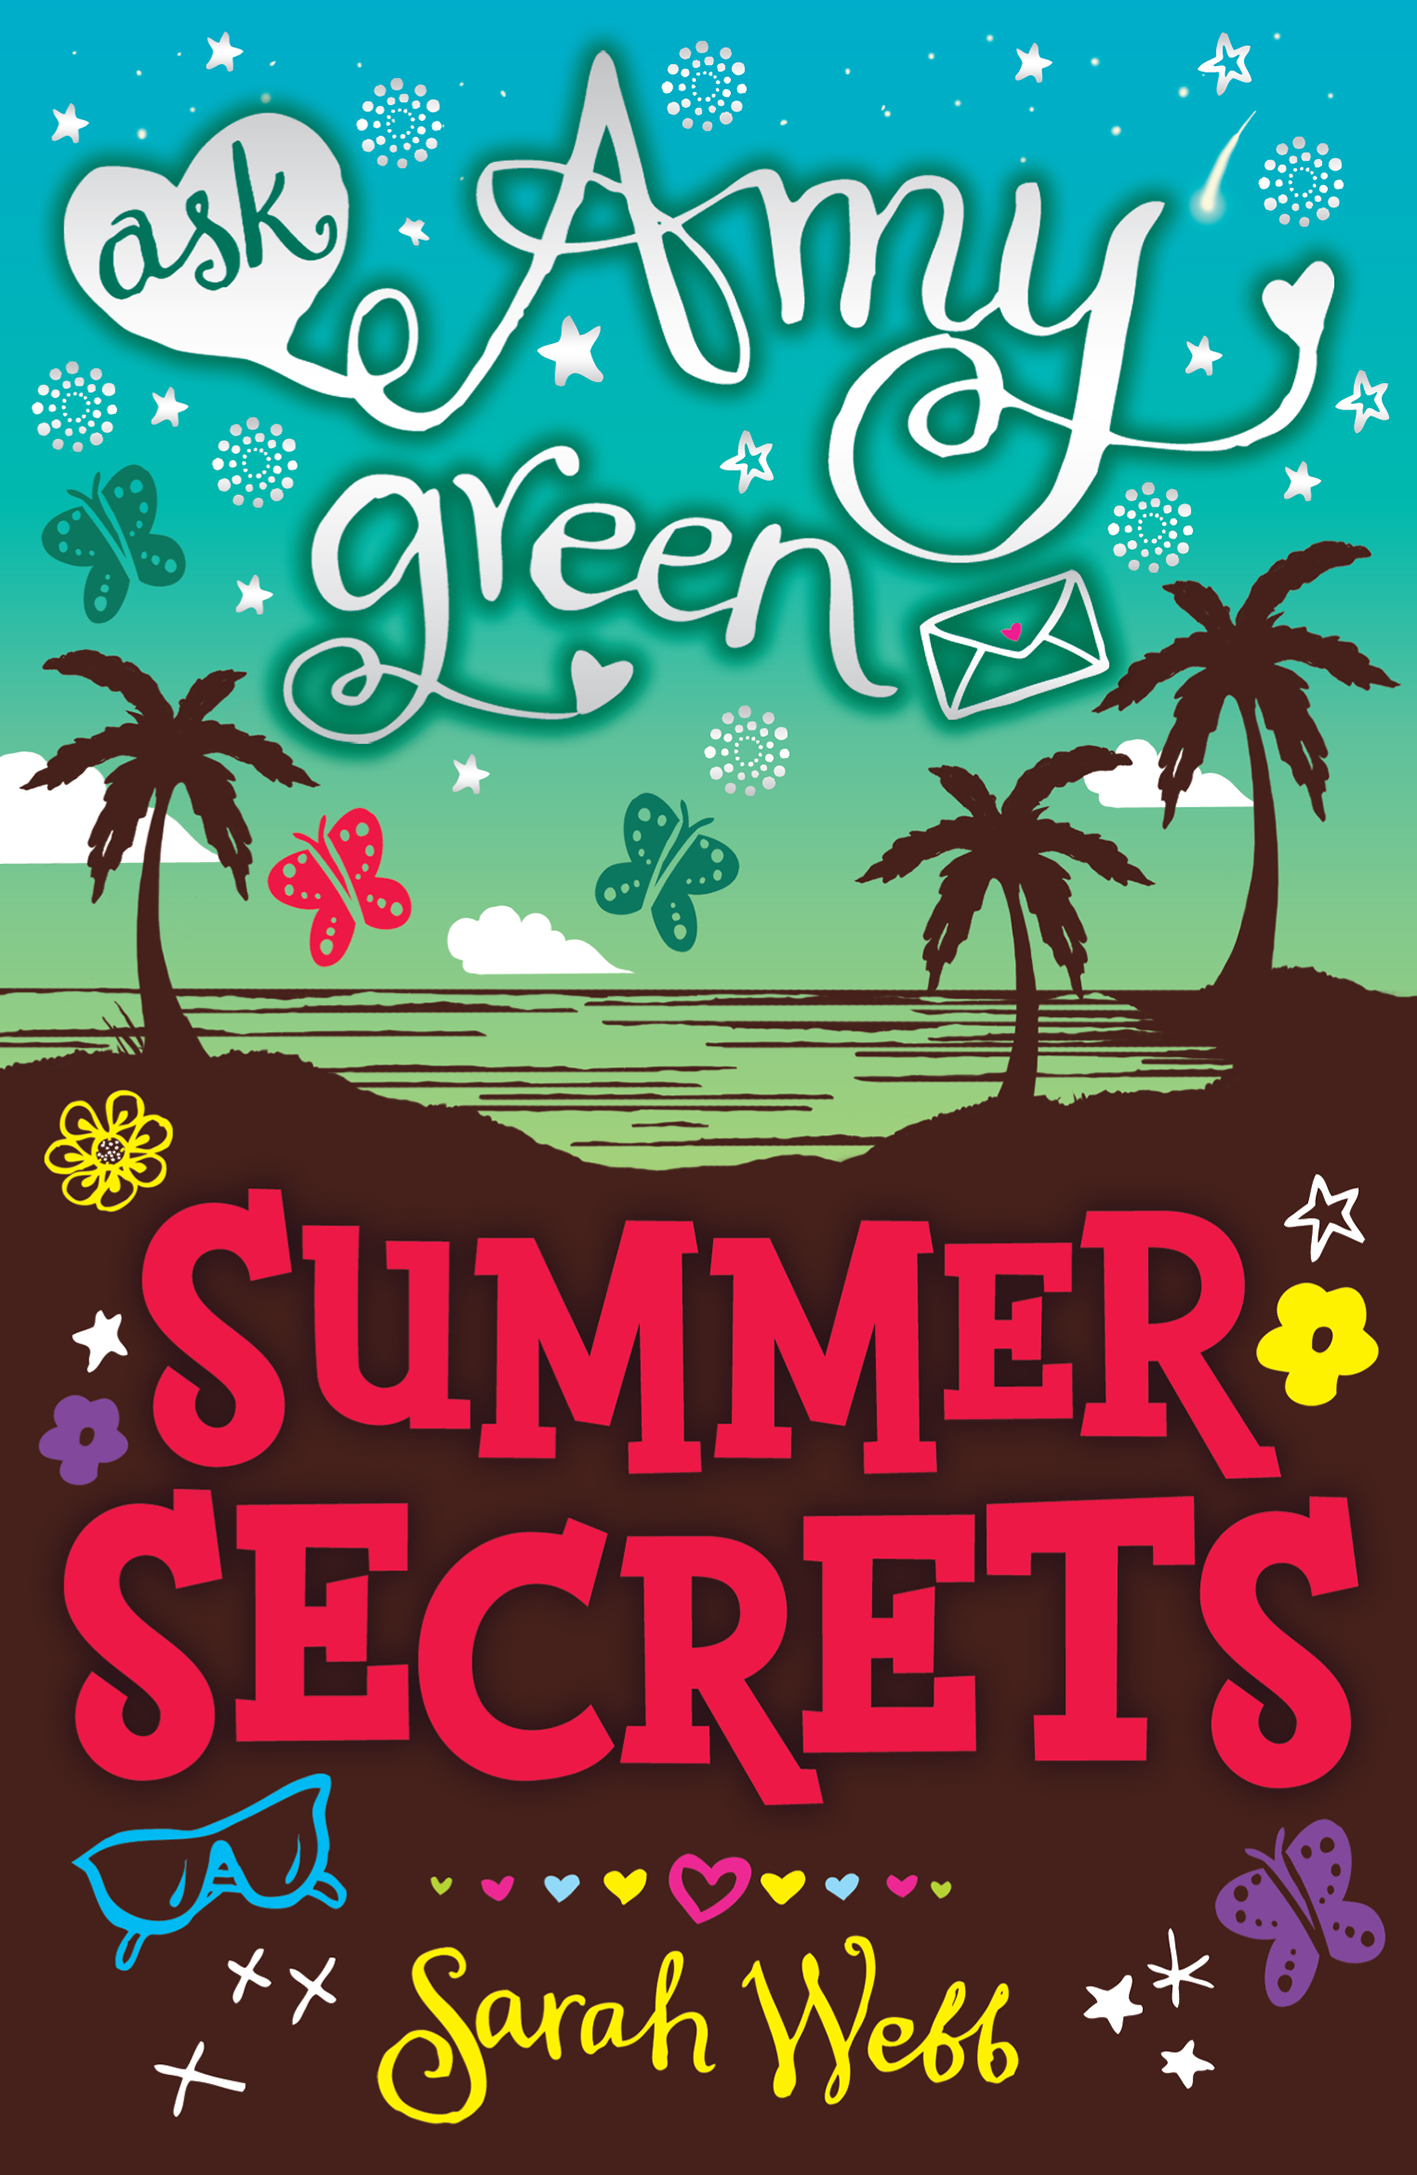 Ask-Amy-Green-Summer-Secrets